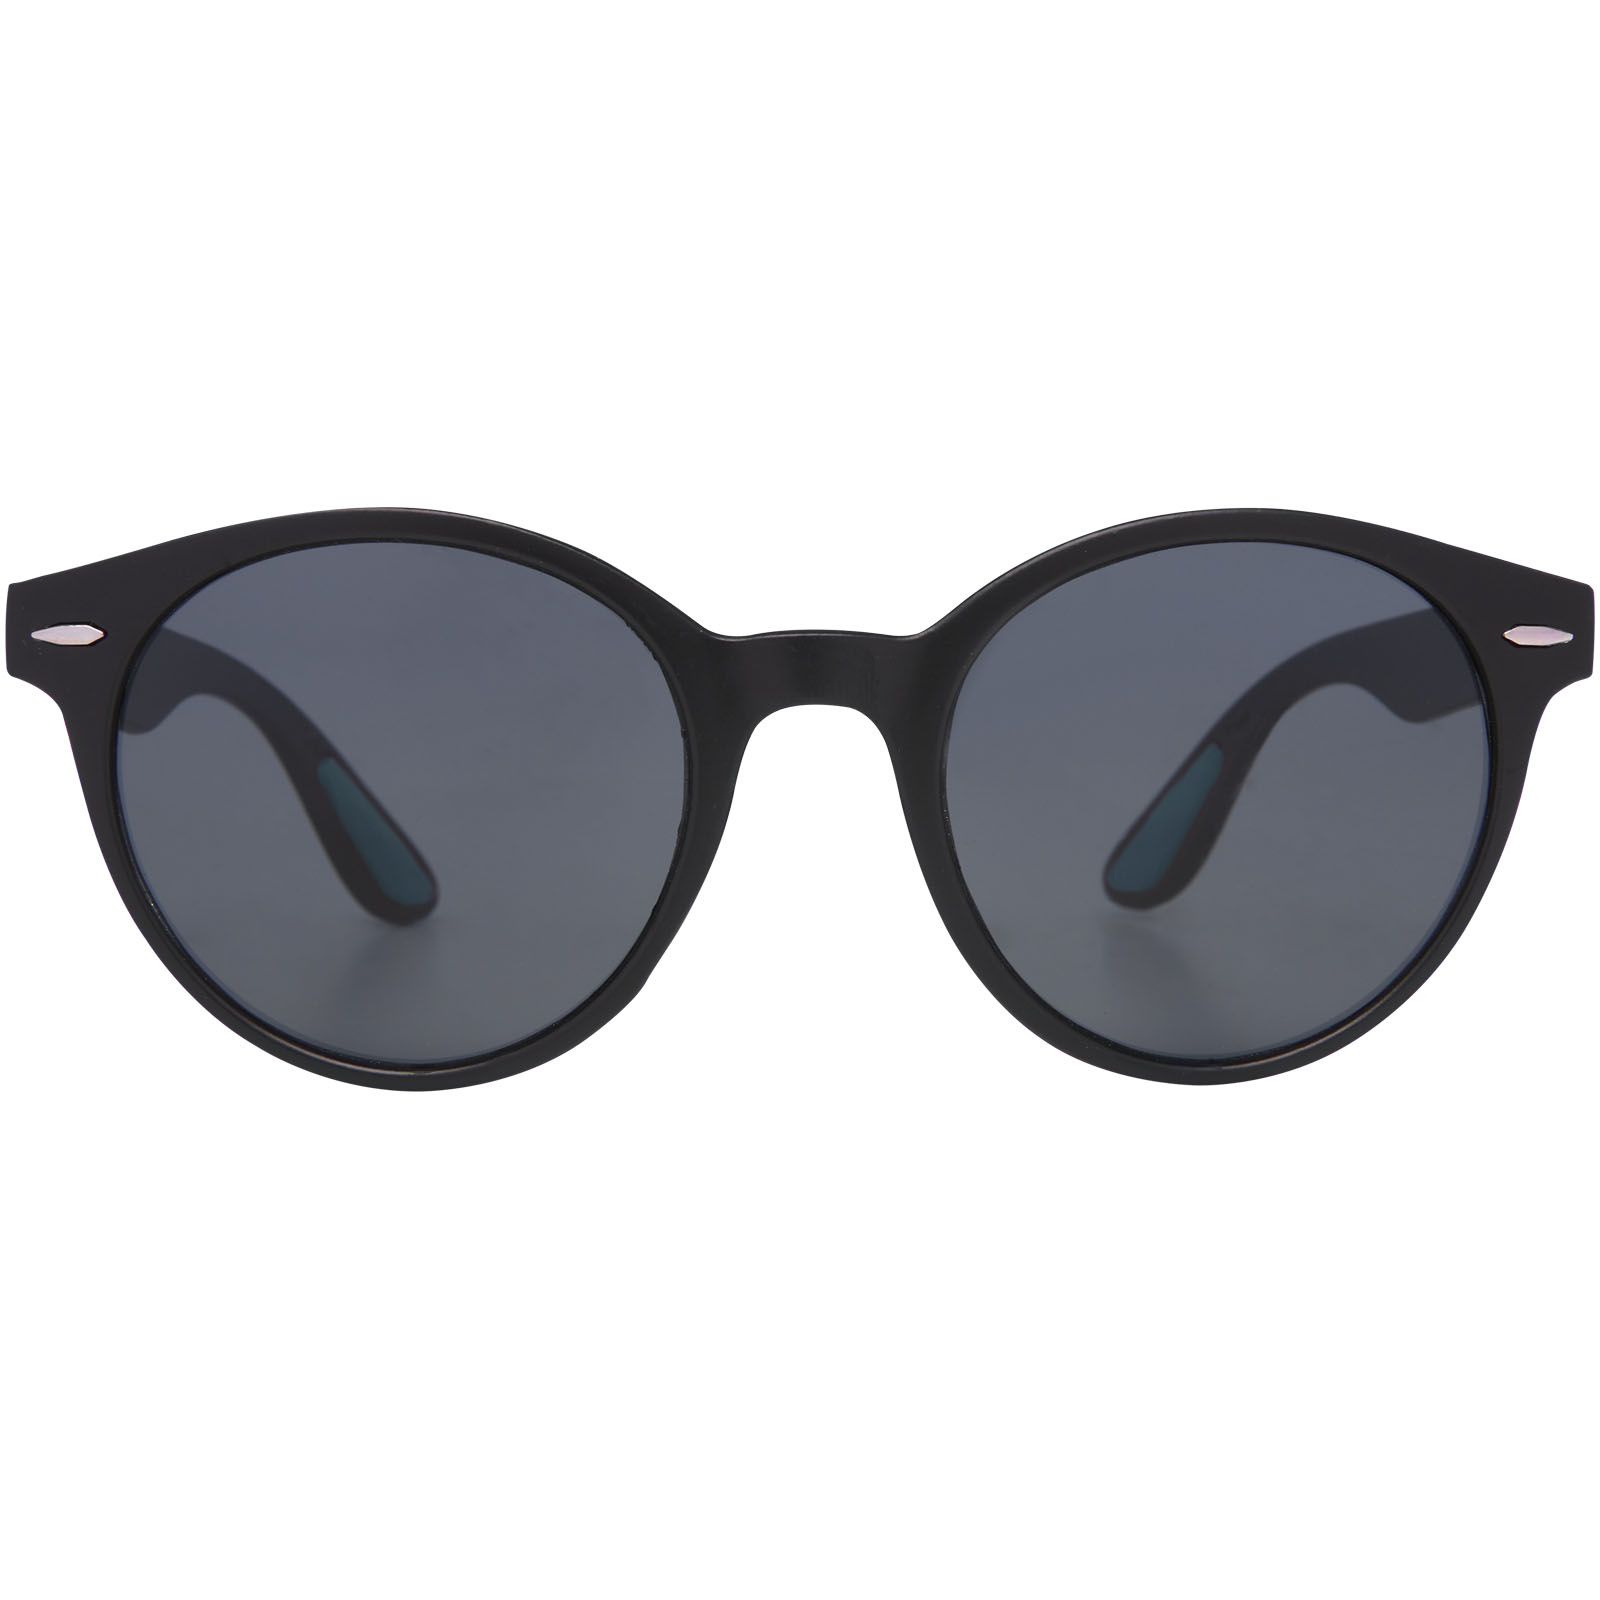 Advertising Sunglasses - Steven round on-trend sunglasses - 1